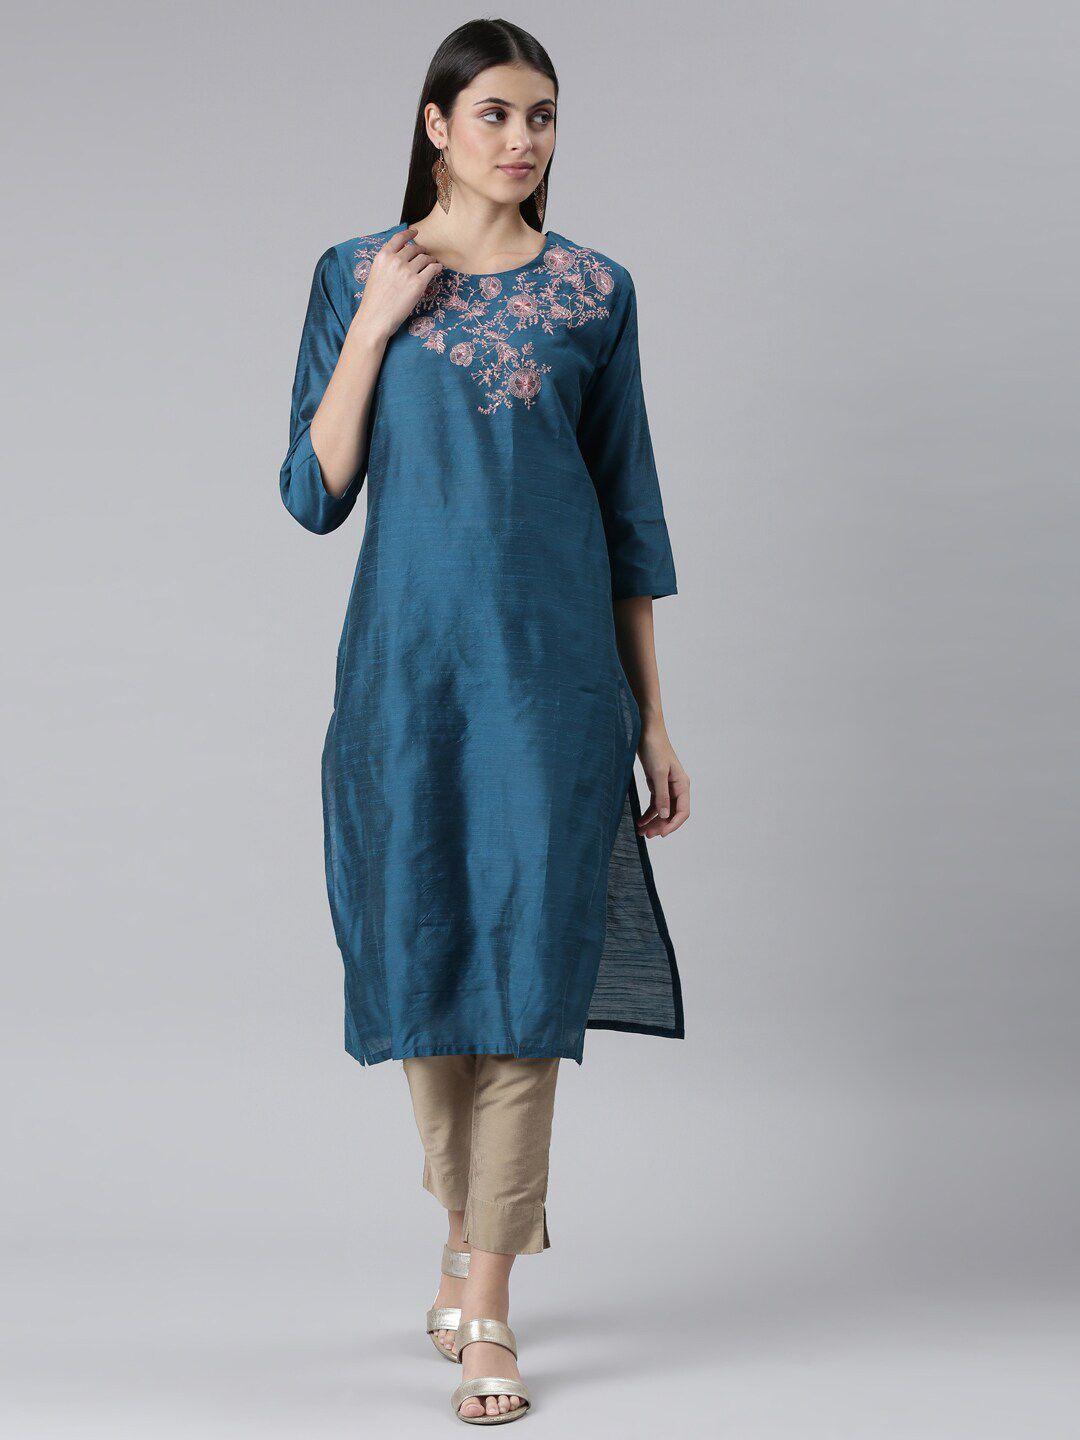 the-chennai-silks-women-design-thread-work-kurta